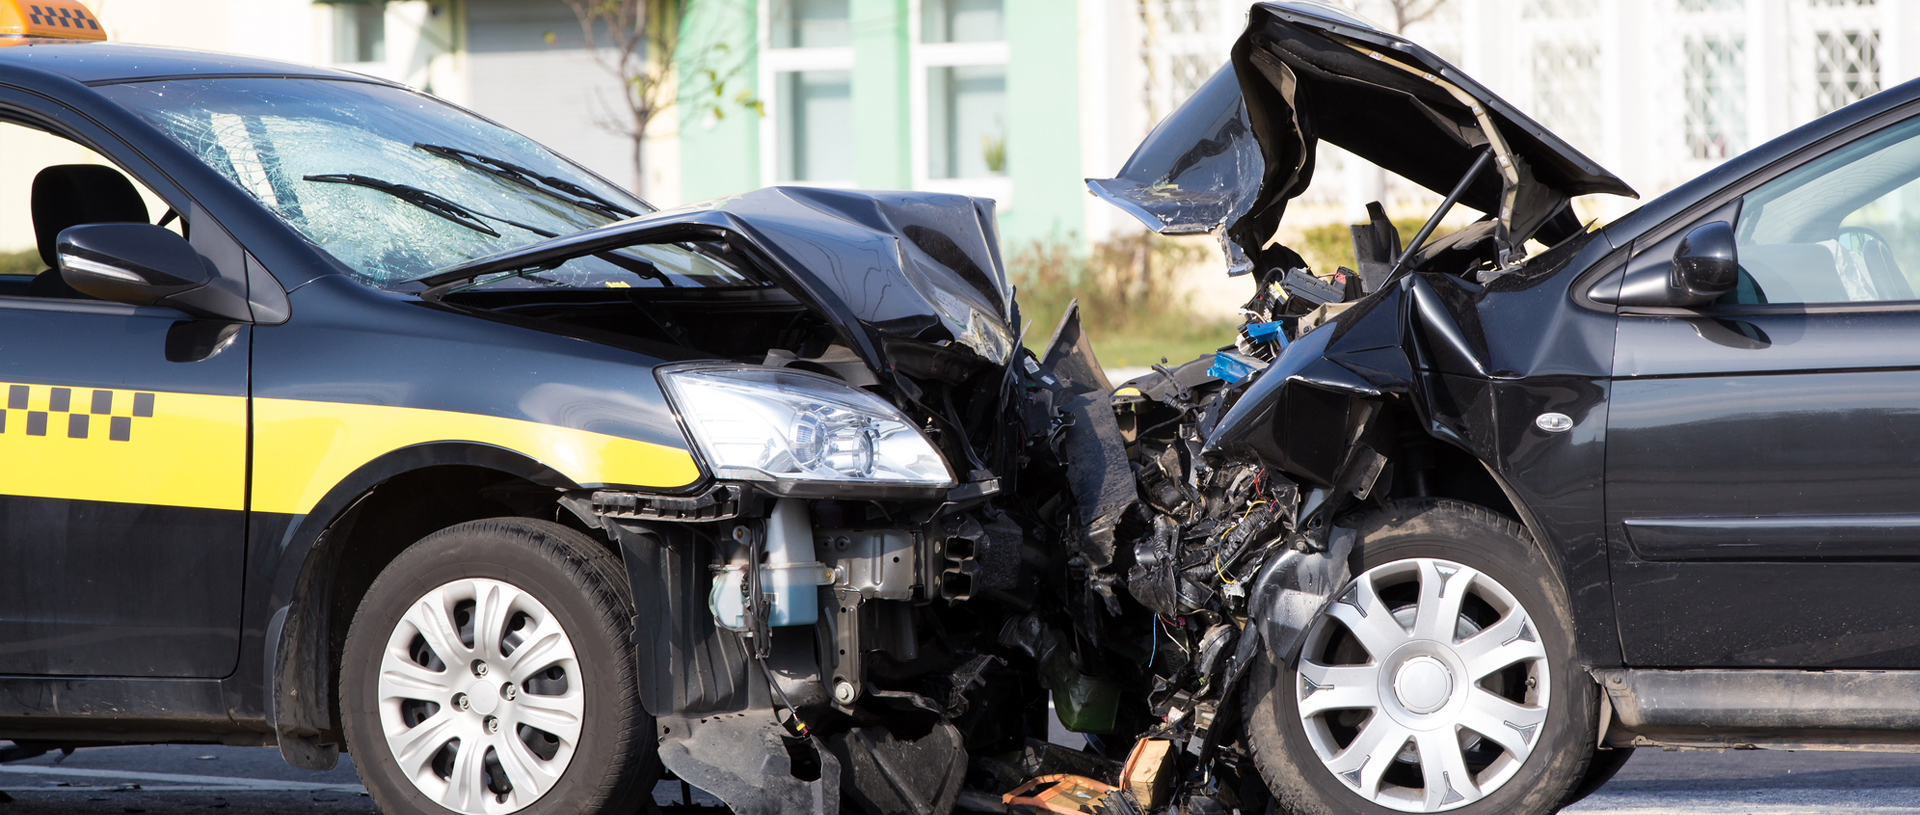 Car Accident Attorney Scottsdale Auto Accident Car Accident